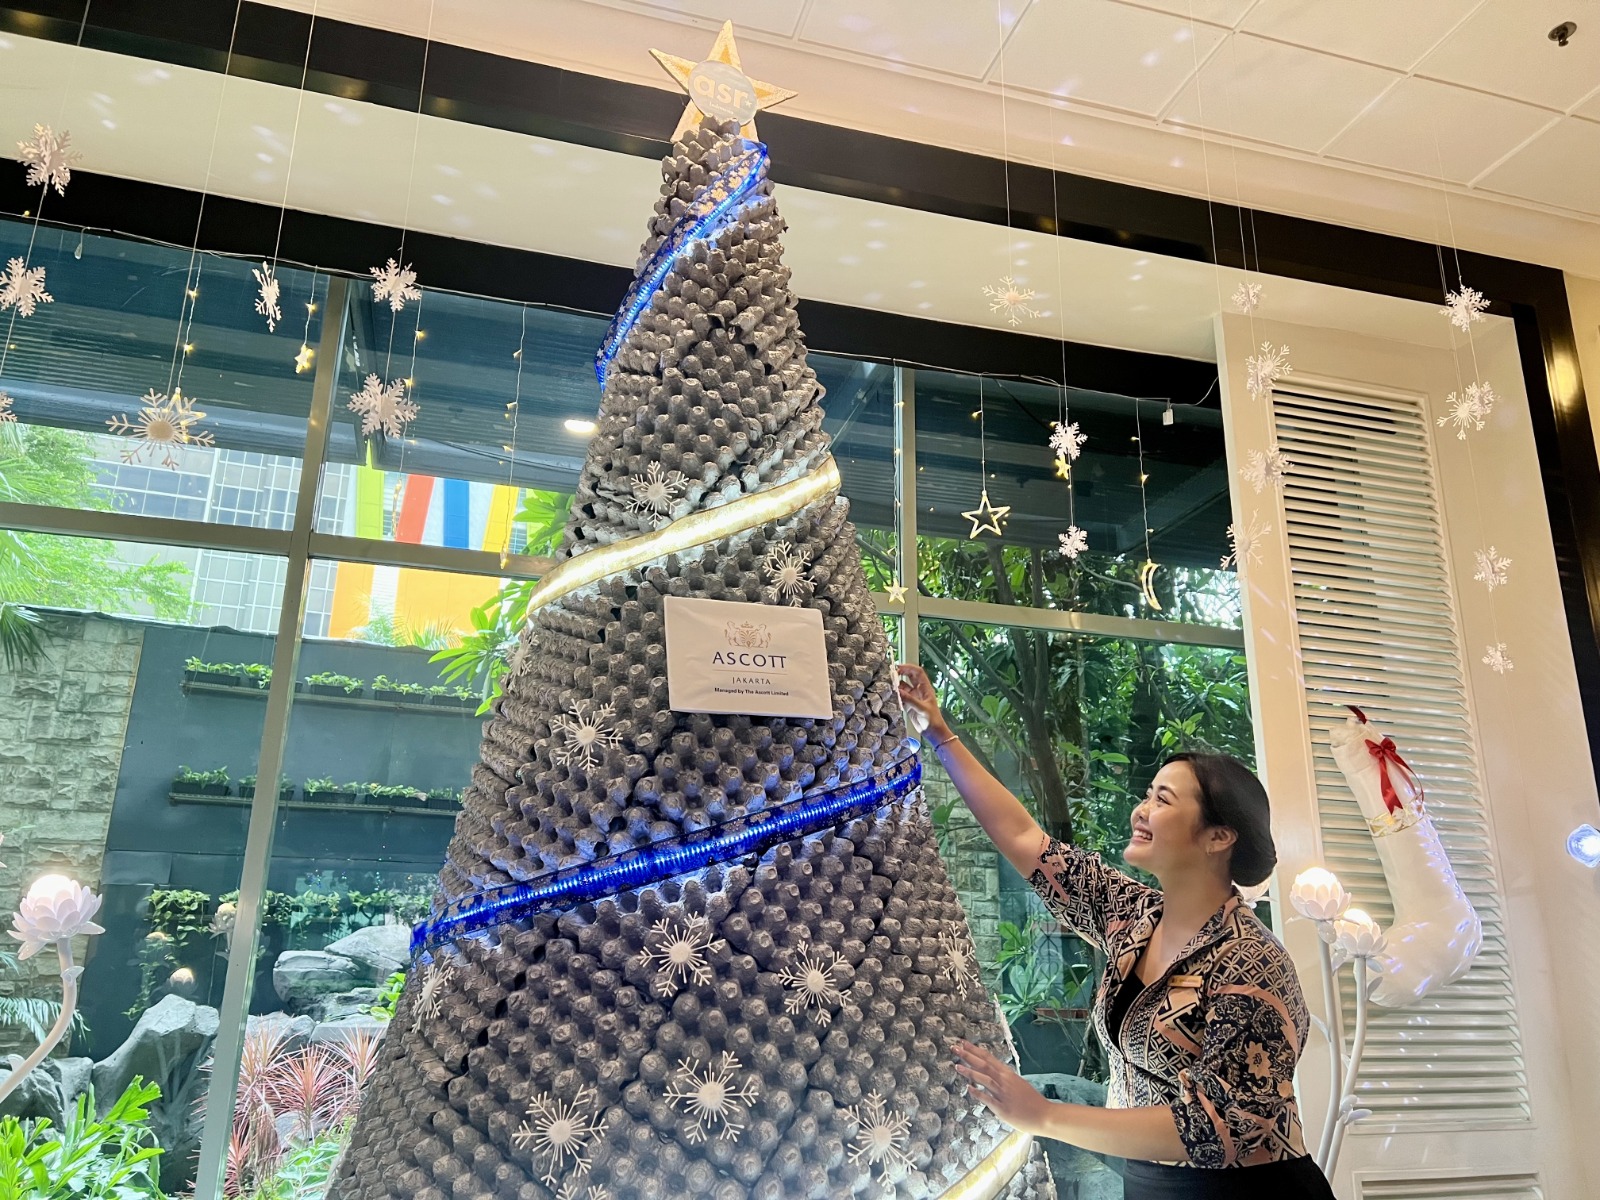 Sambut Hari Raya Natal, Ascott Jakarta Bikin Pohon Natal dari Kemasan Telur Bekas